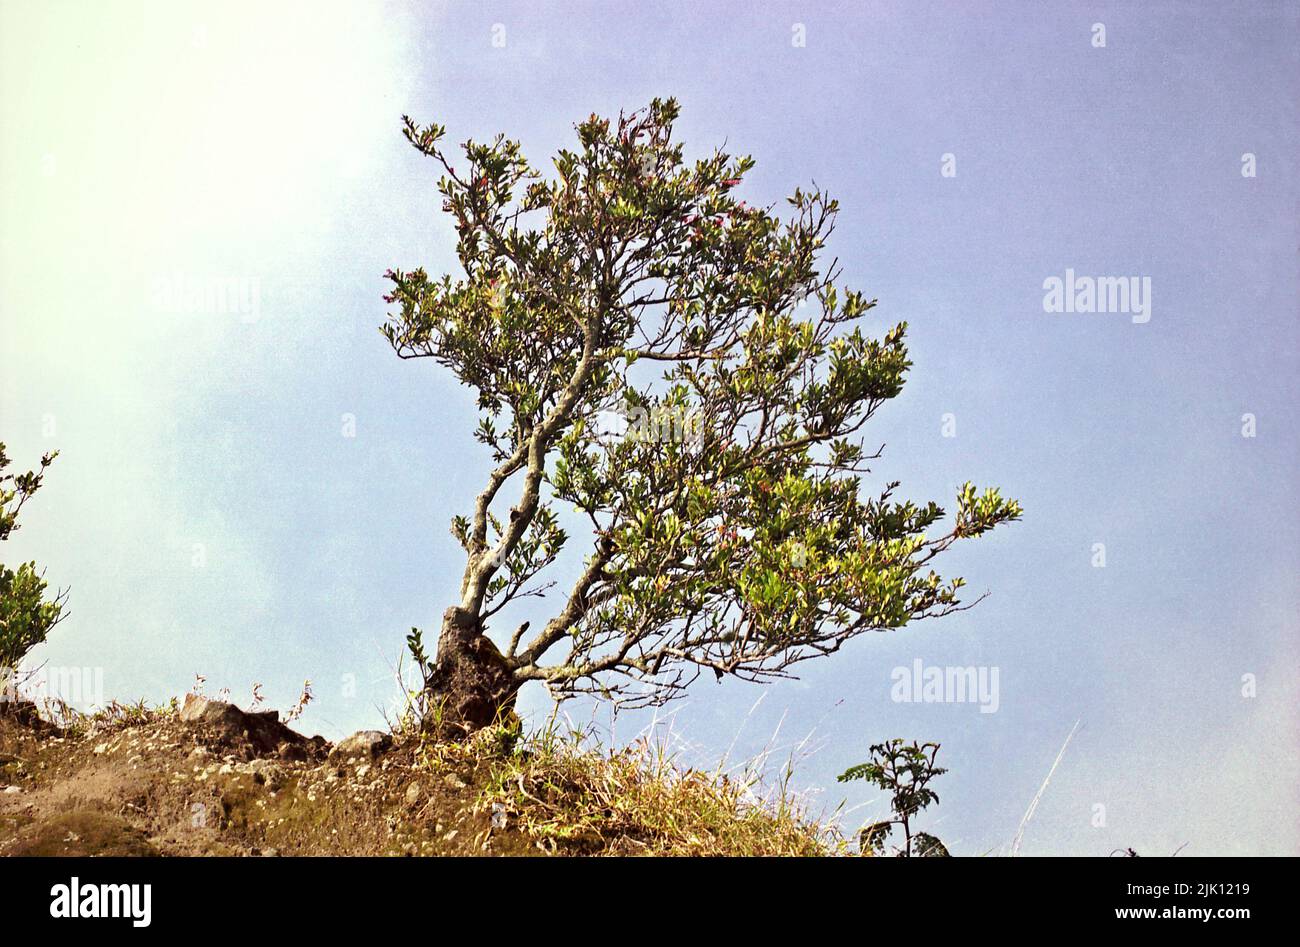 Ein Cantigi-Baum am Hang des Vulkans Mount Merapi in Boyolali, Zentral-Java, Indonesien. Stockfoto